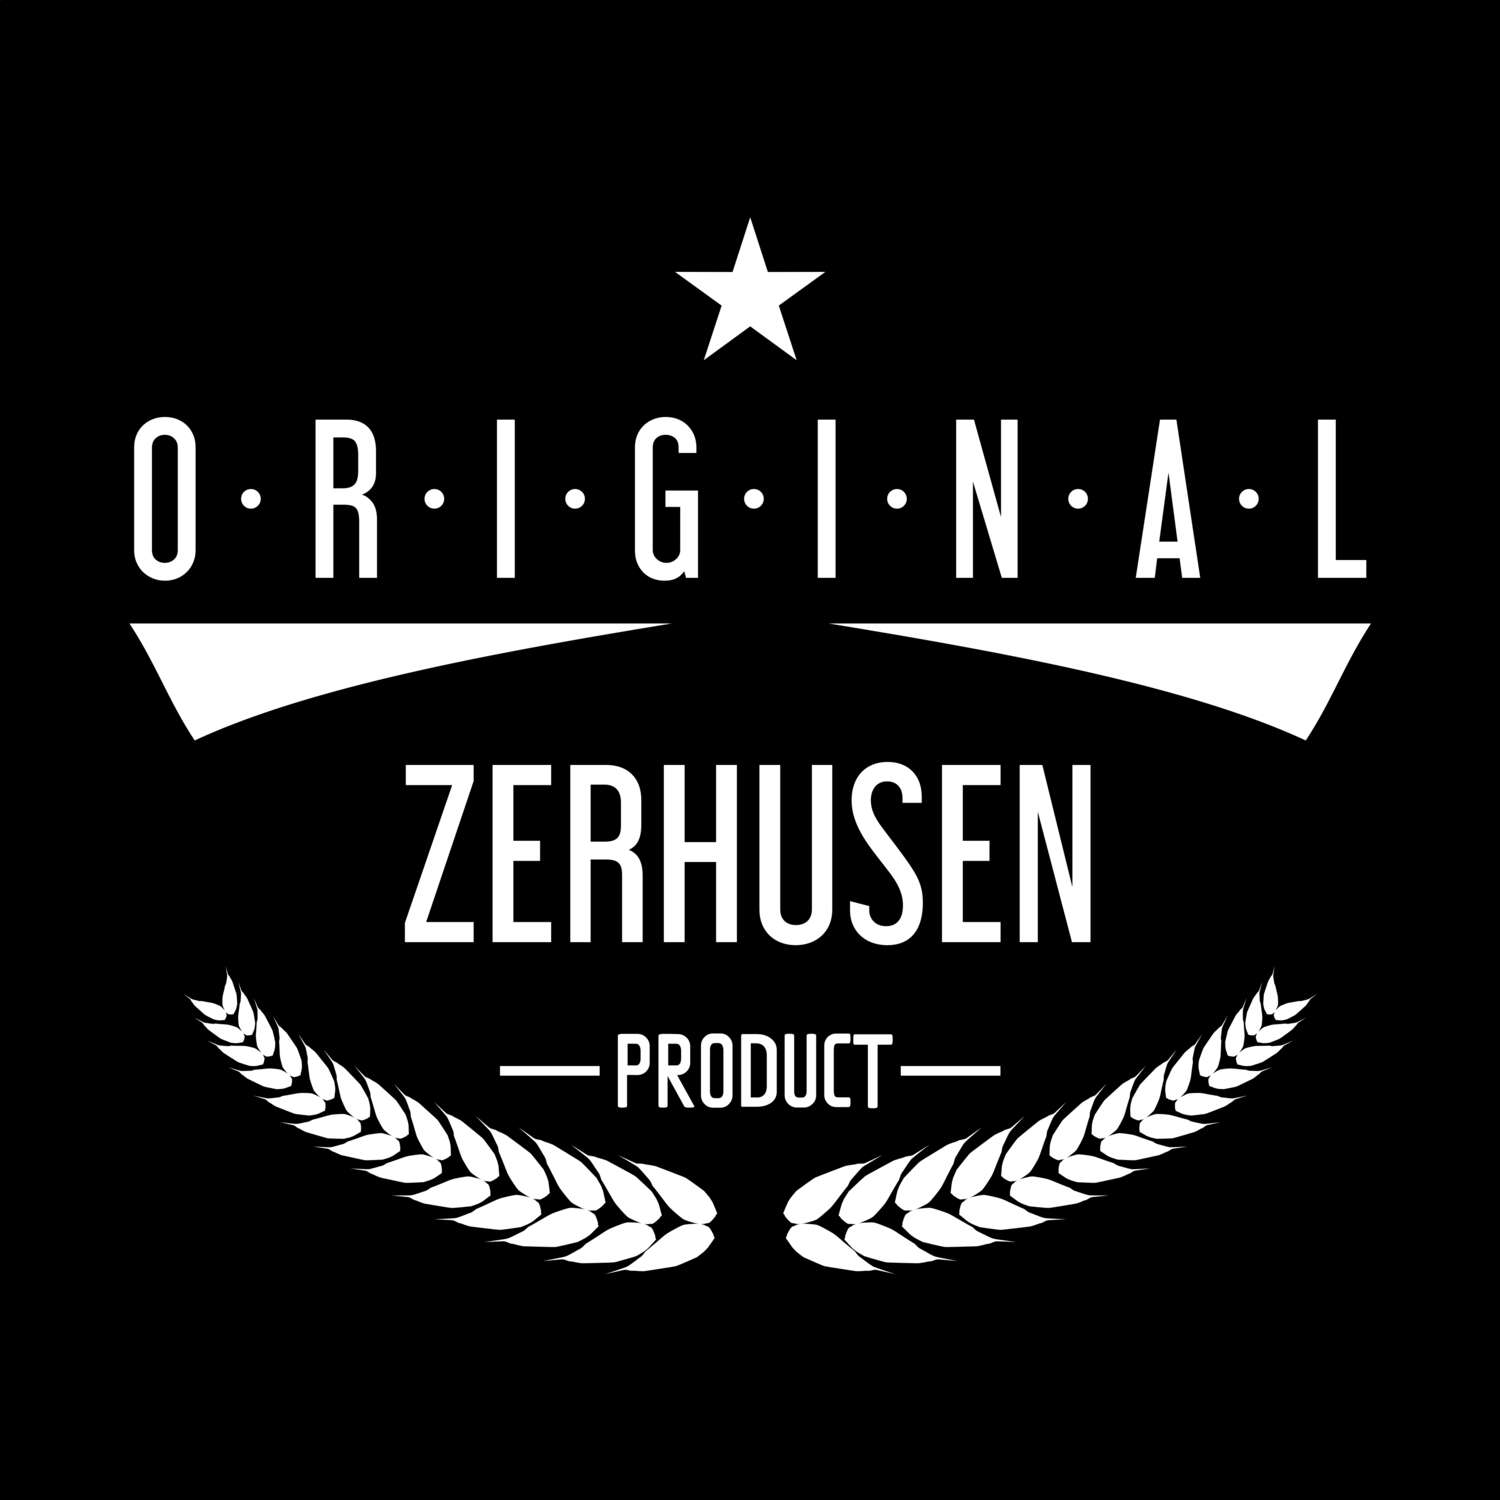 Zerhusen T-Shirt »Original Product«